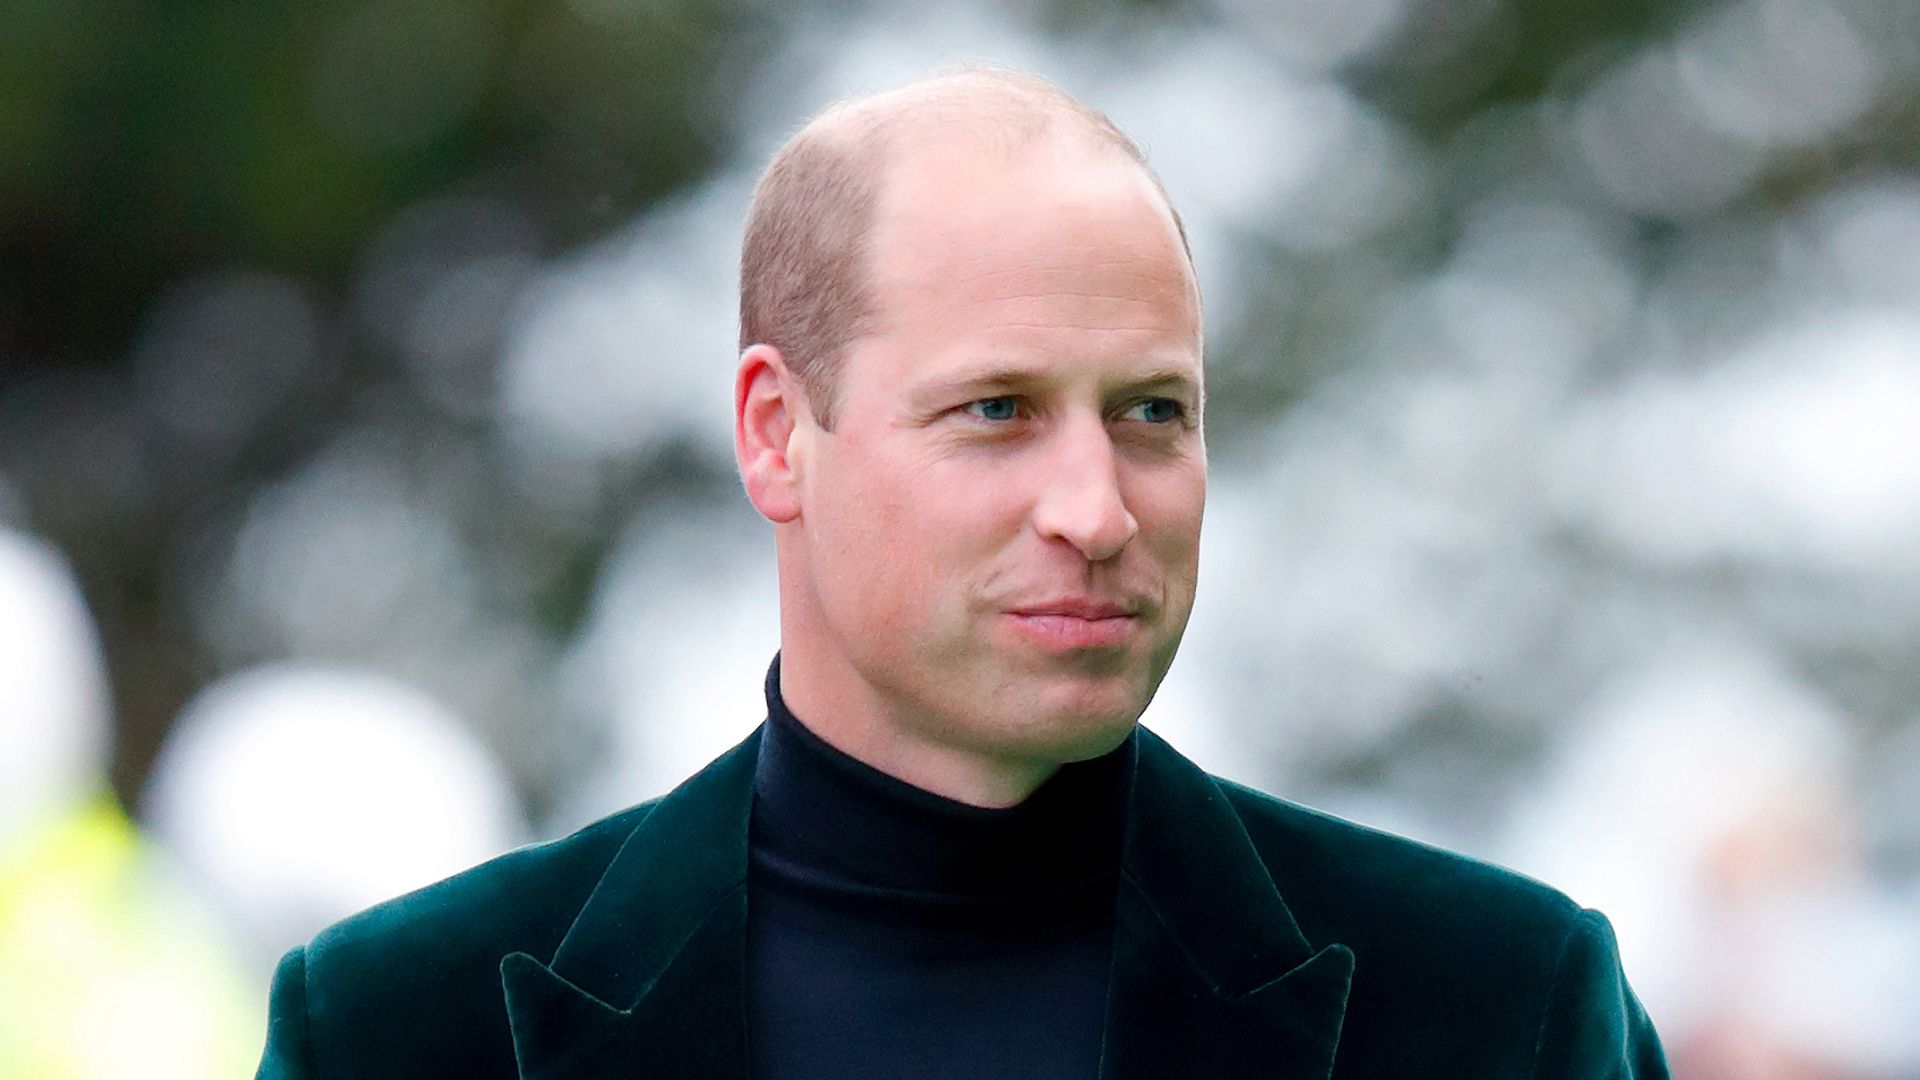 Prince William makes secret visit to MI6 ahead of major royal event